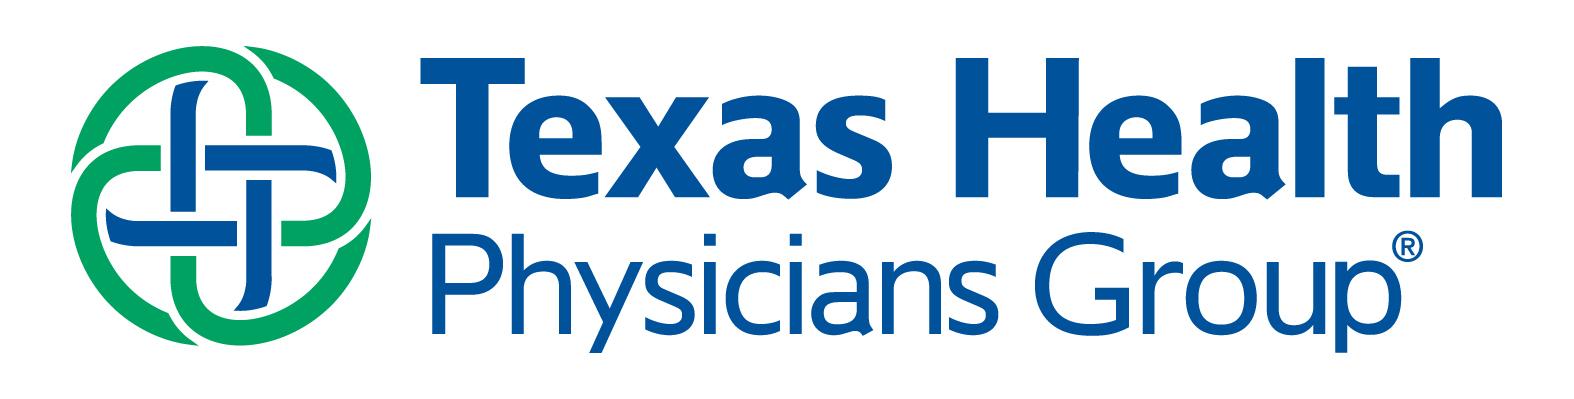 Texas Health Physicians Group - Mansfield, TX